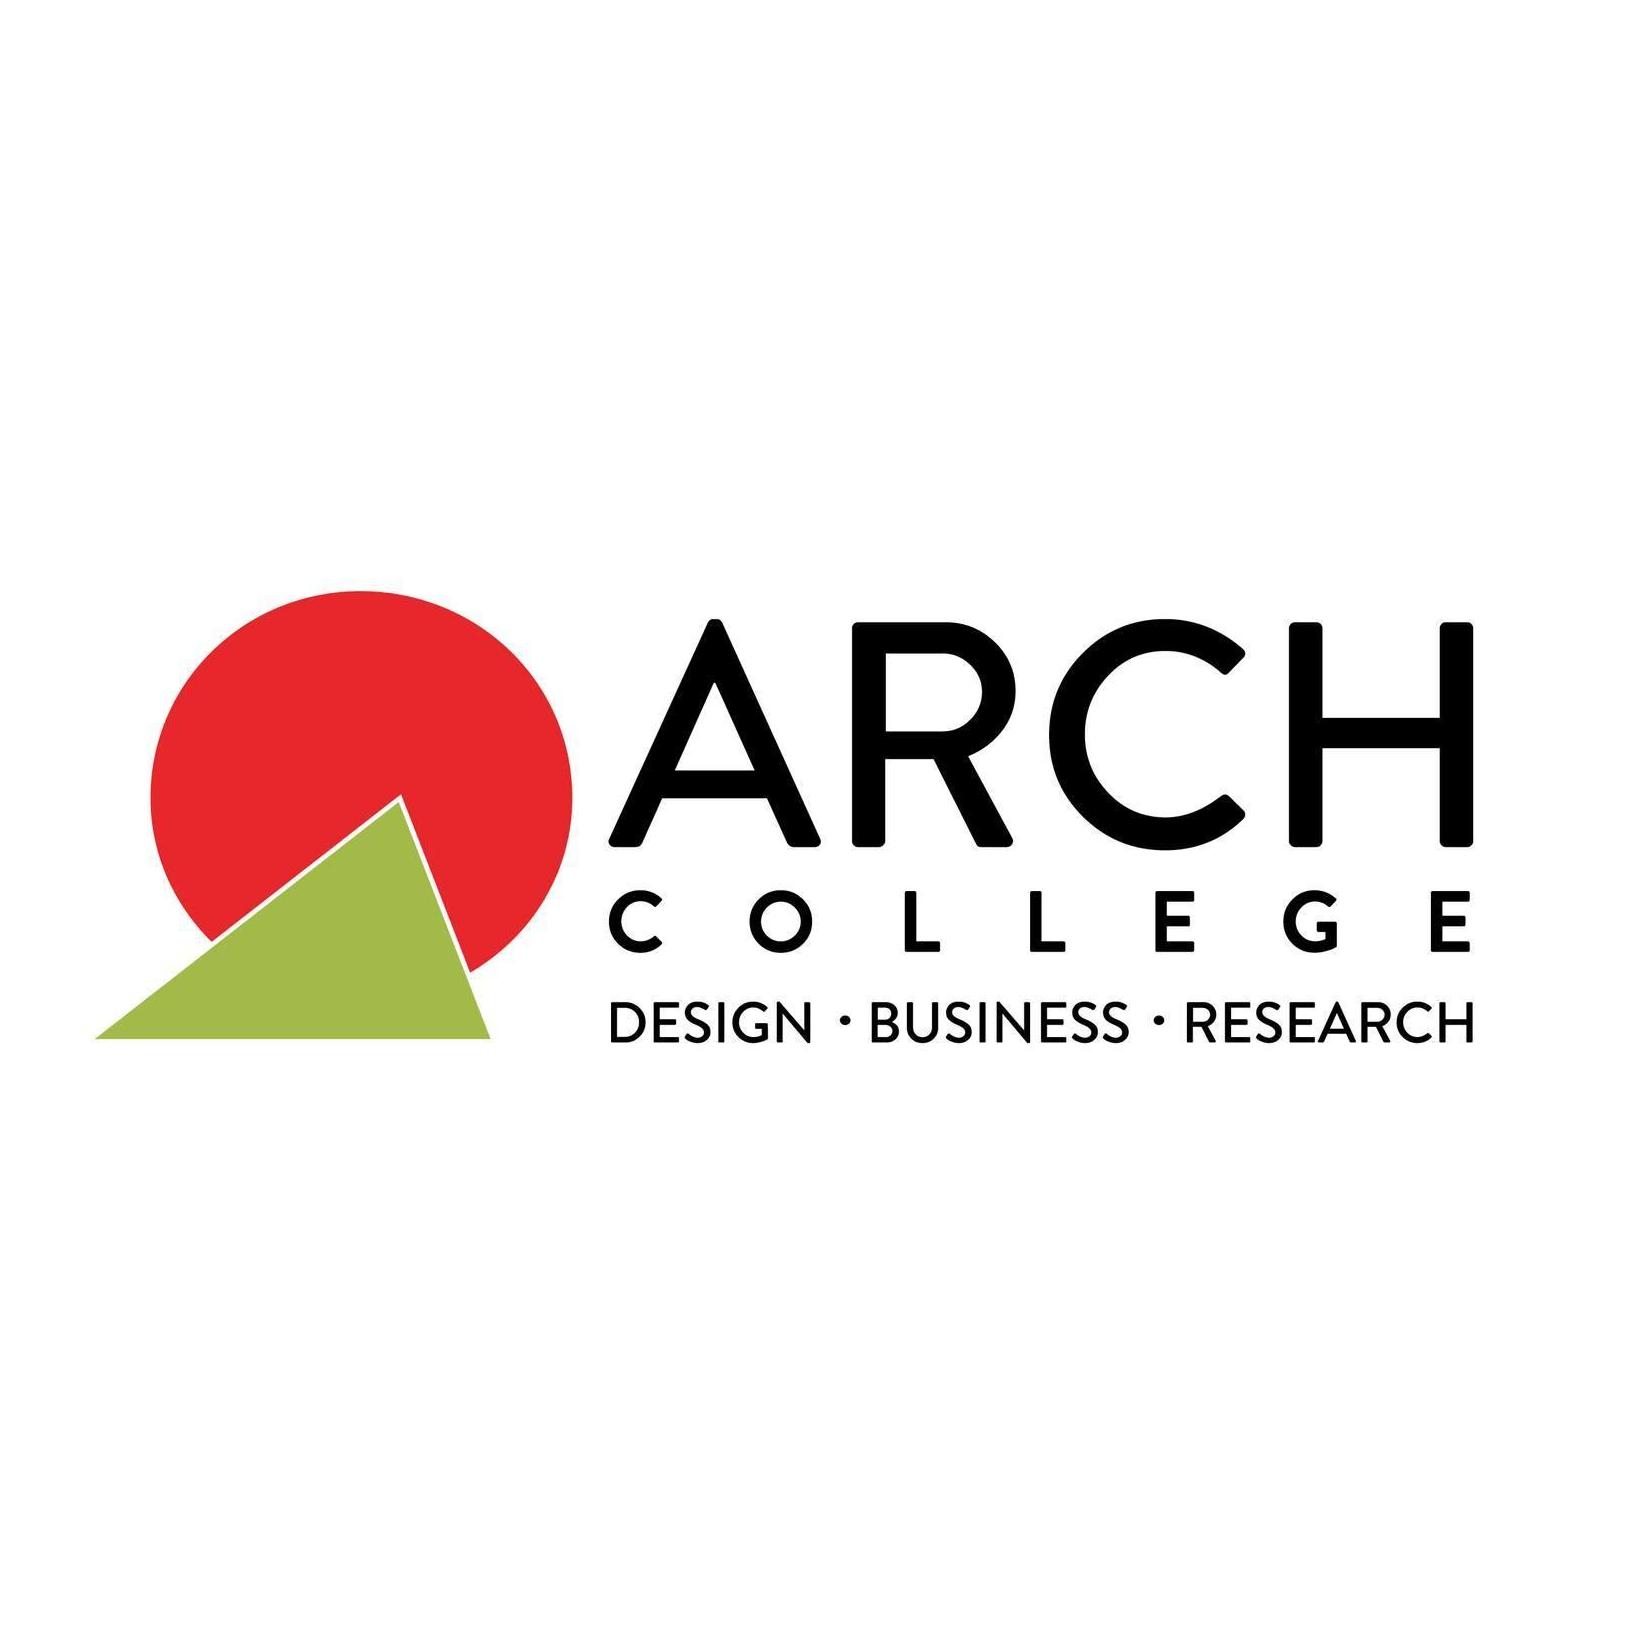 ARCH College